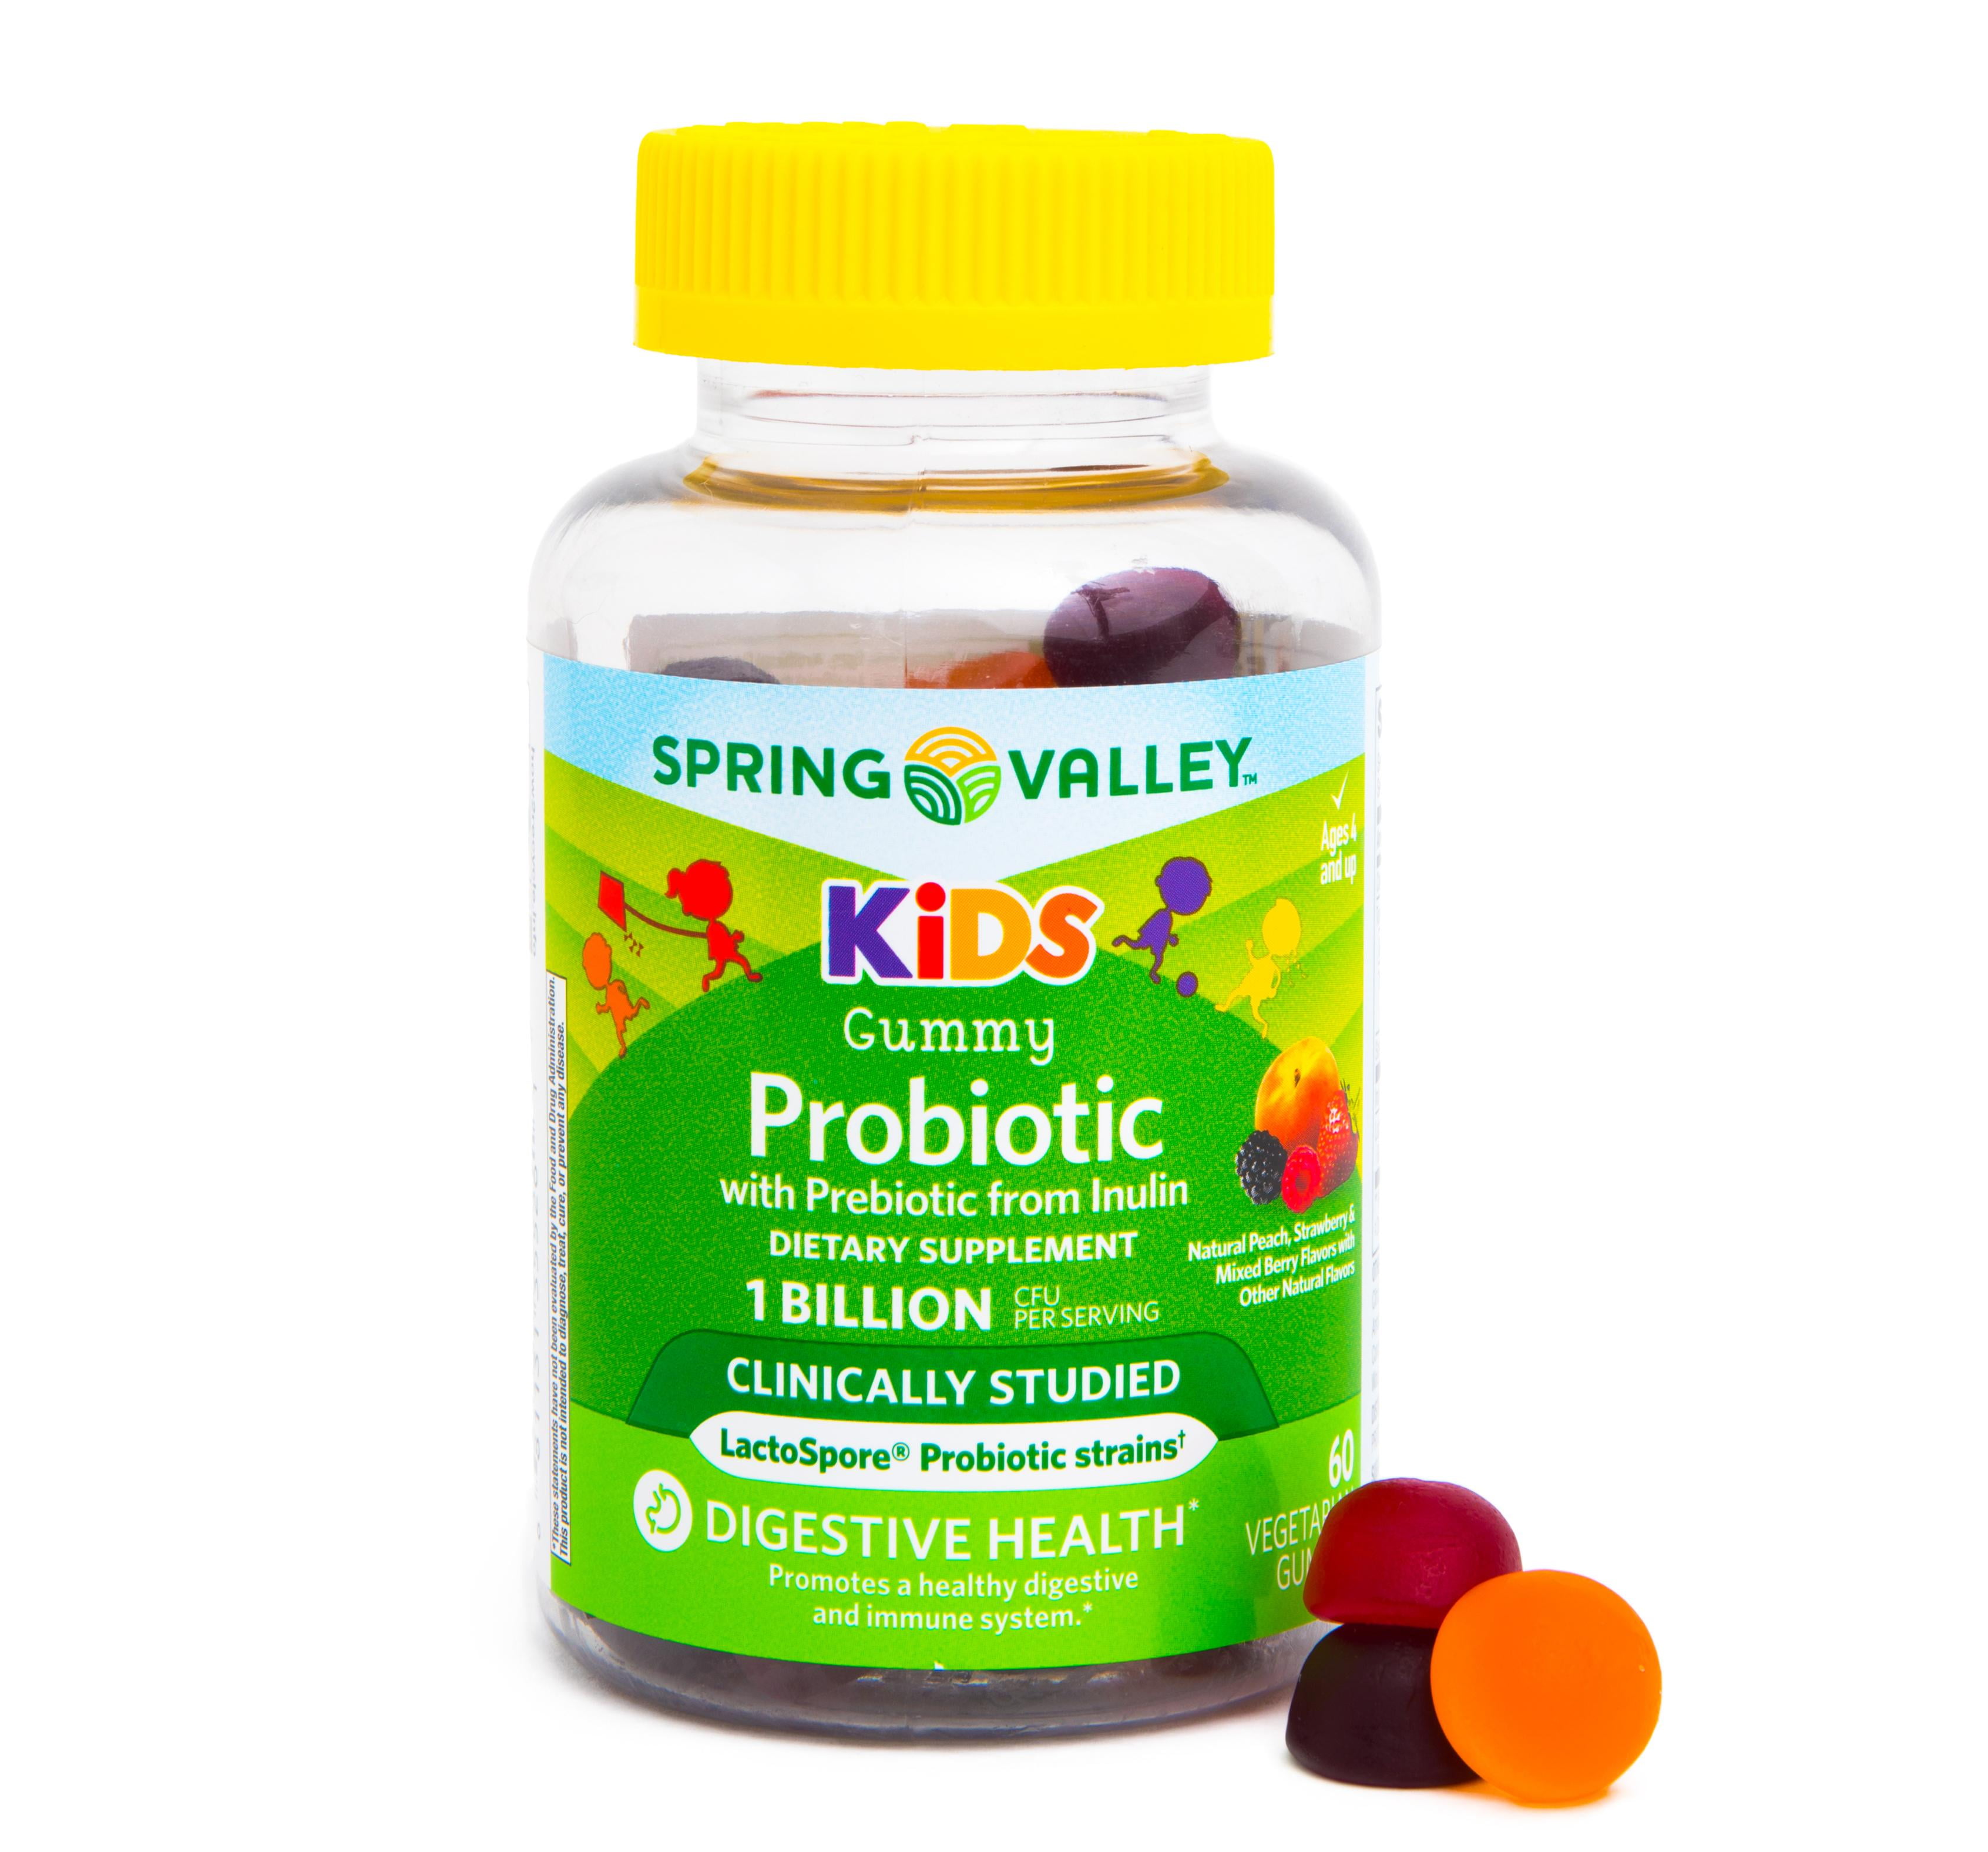 probiotics for kids